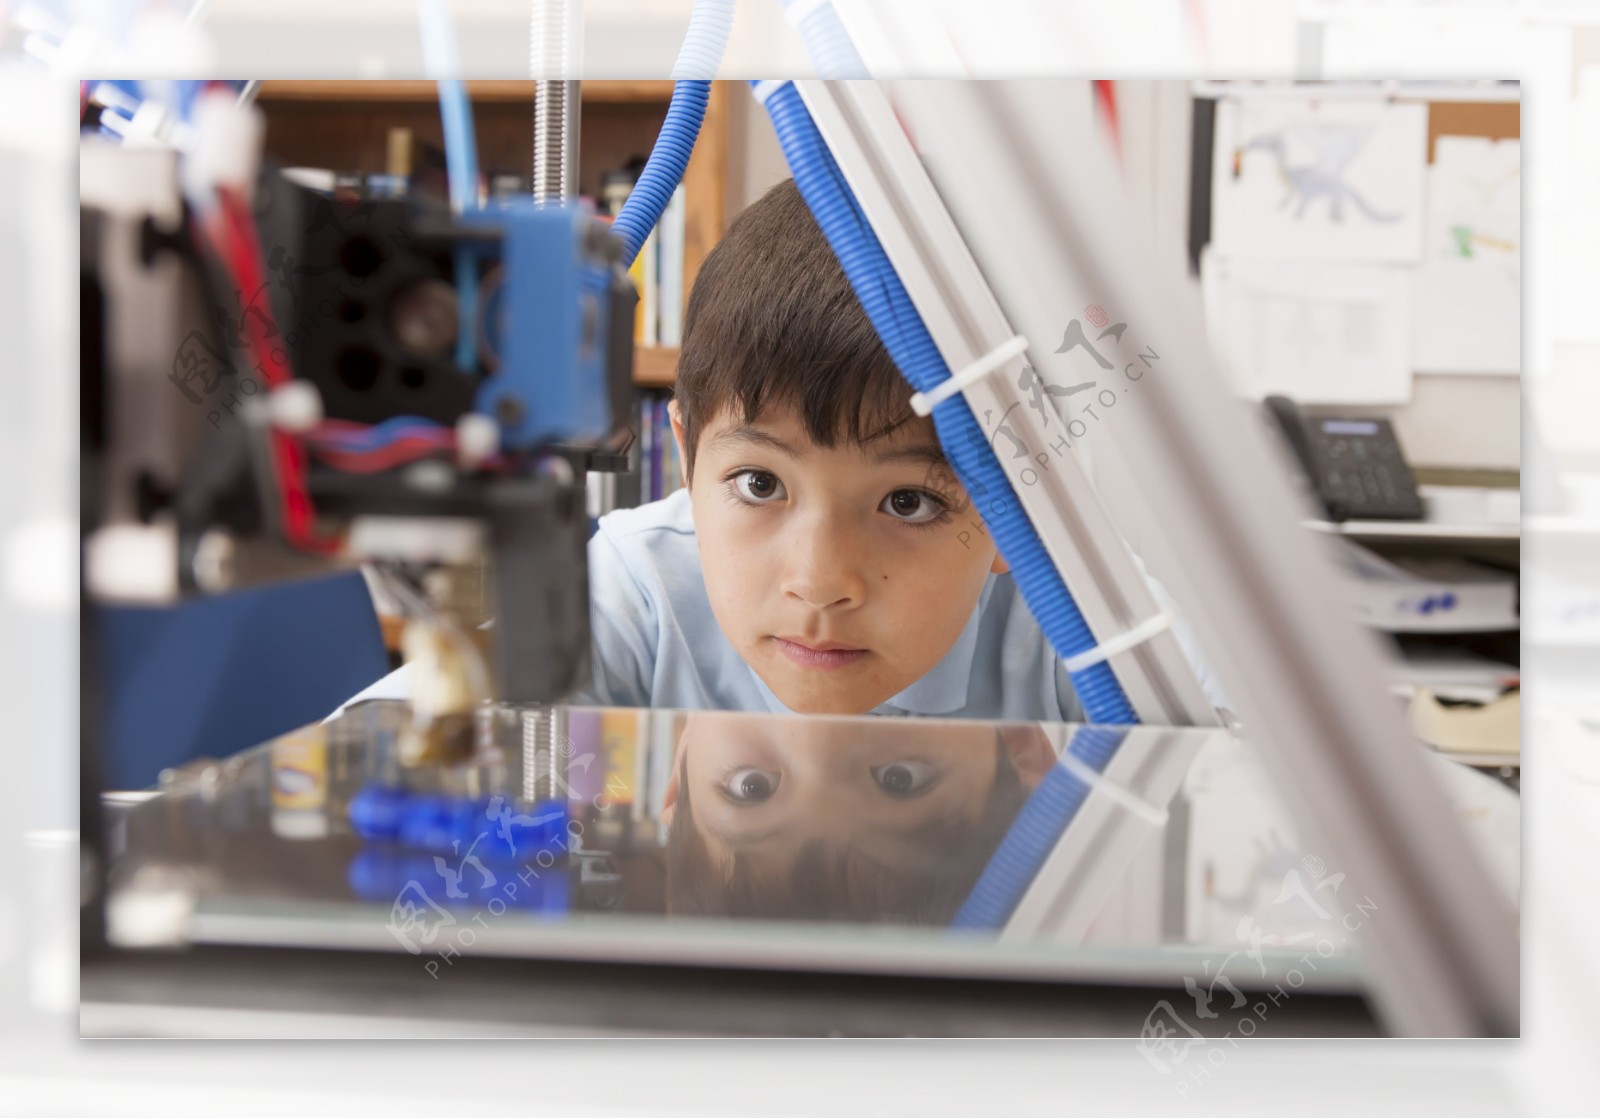 3D打印机前面的小男孩图片